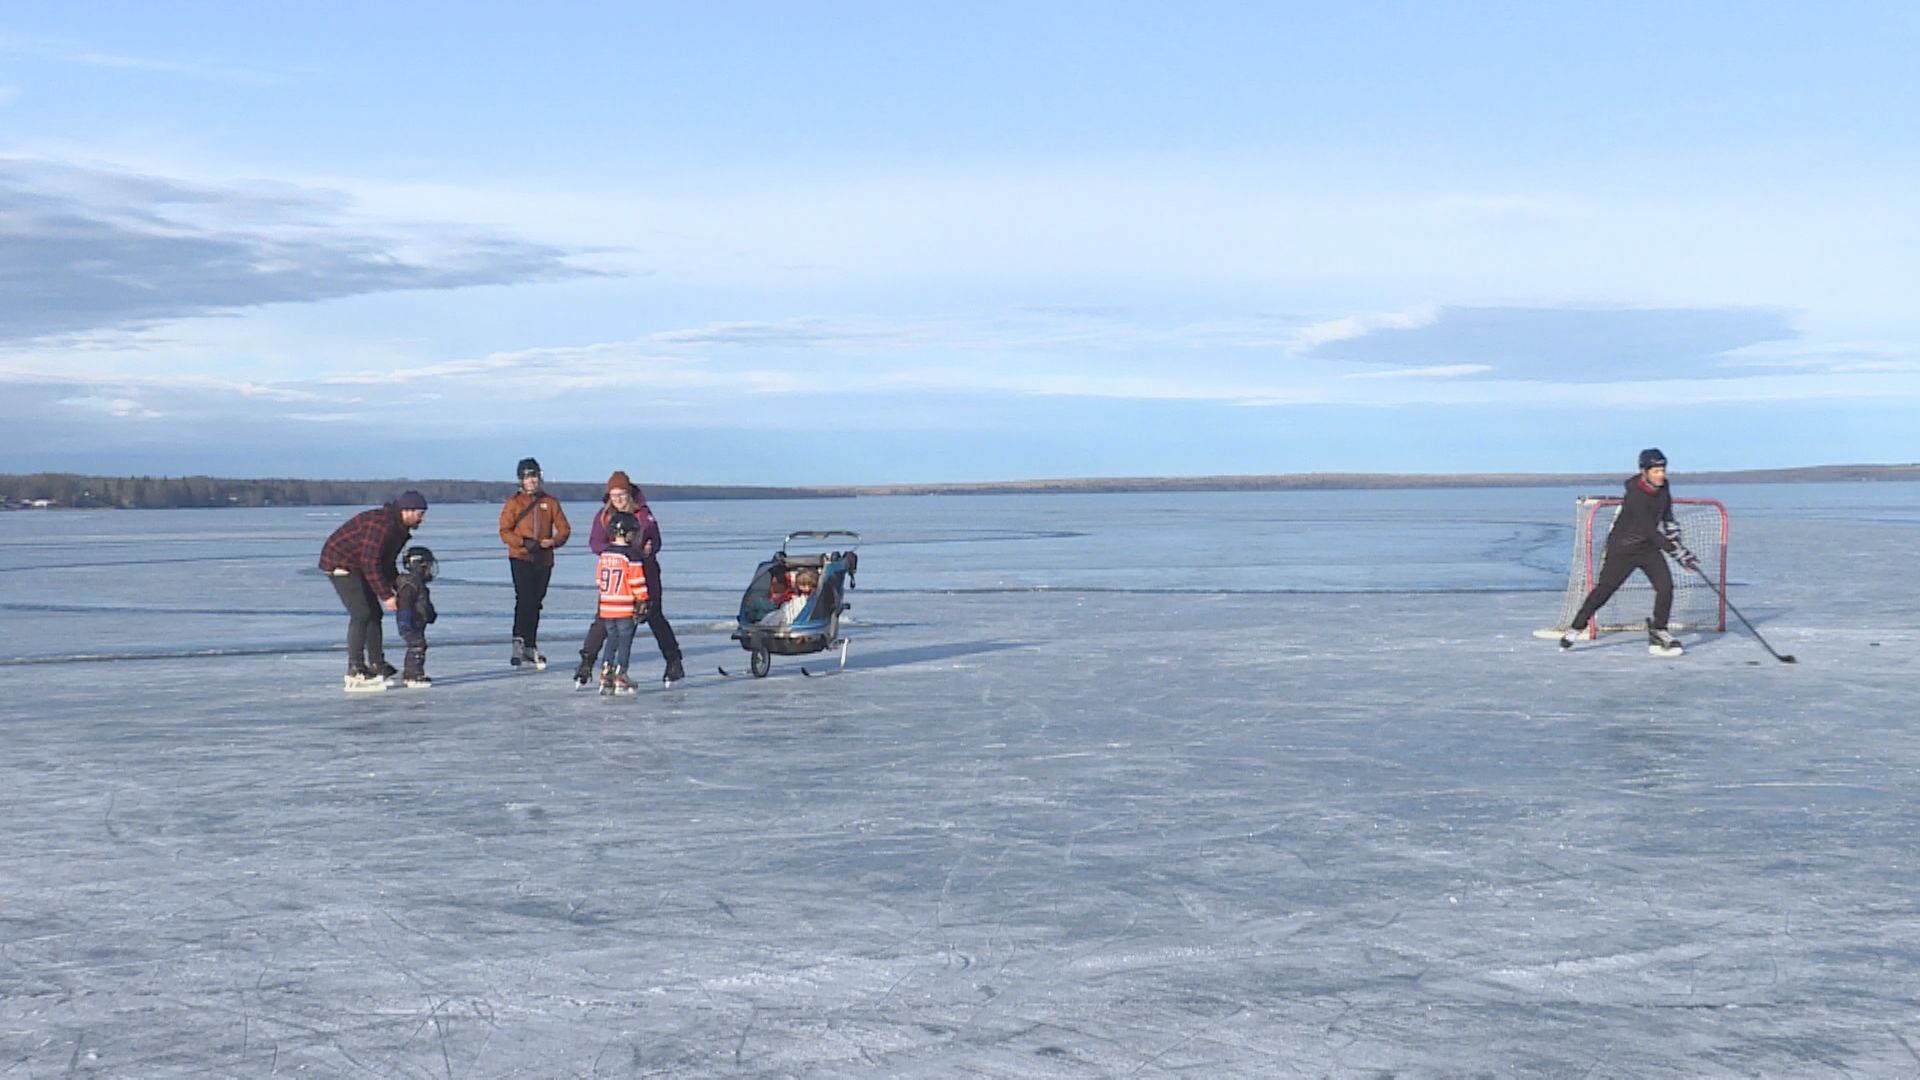 ‘Stay vigilant’: Warm weather in Alberta making ice conditions unpredictable